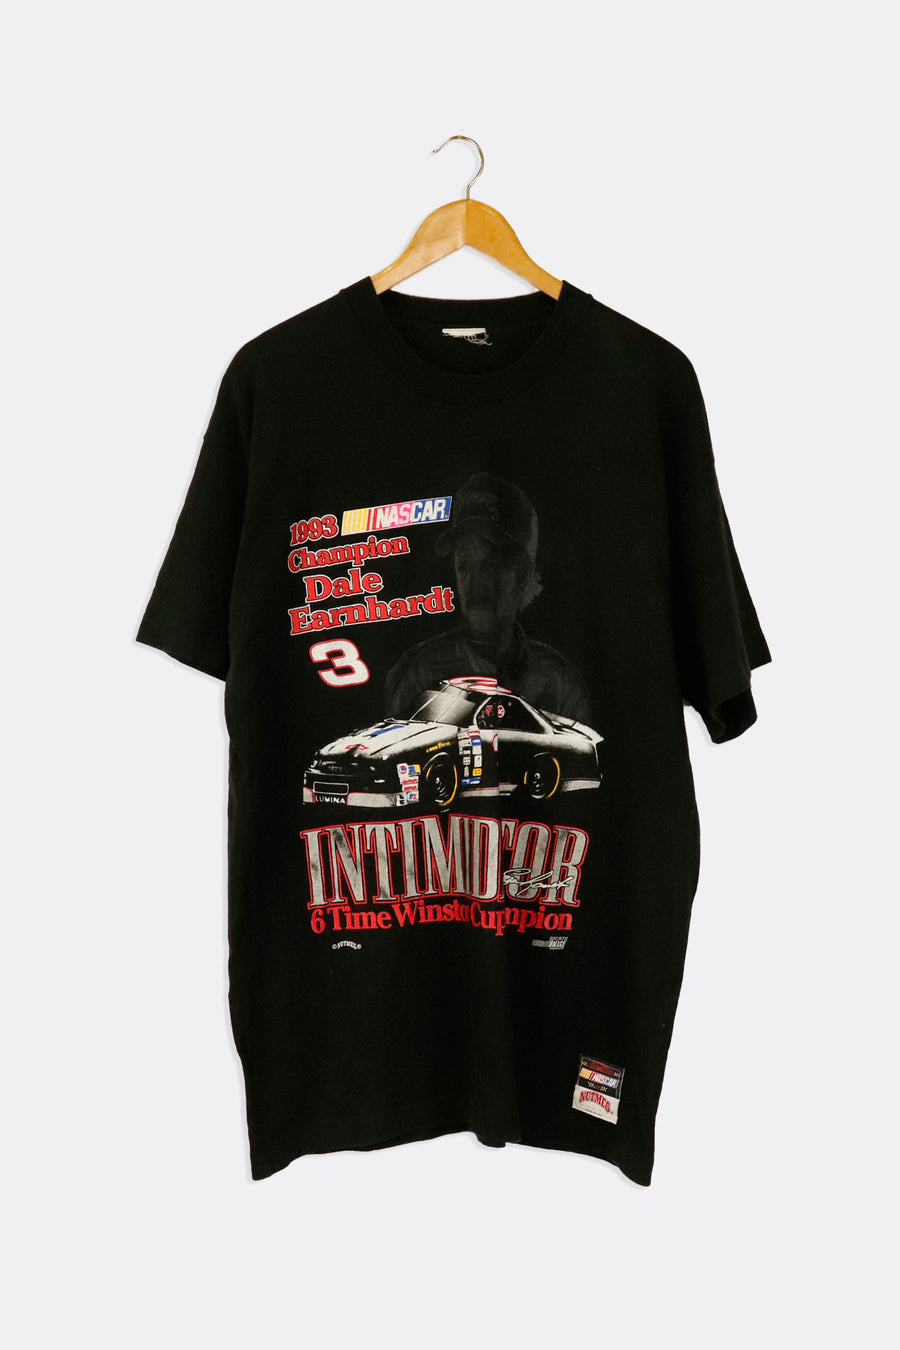 Vintage 1993 Nascar Dale Earnhardt 3 Intimidator 6 Time Winston Cup Graphic T Shirt